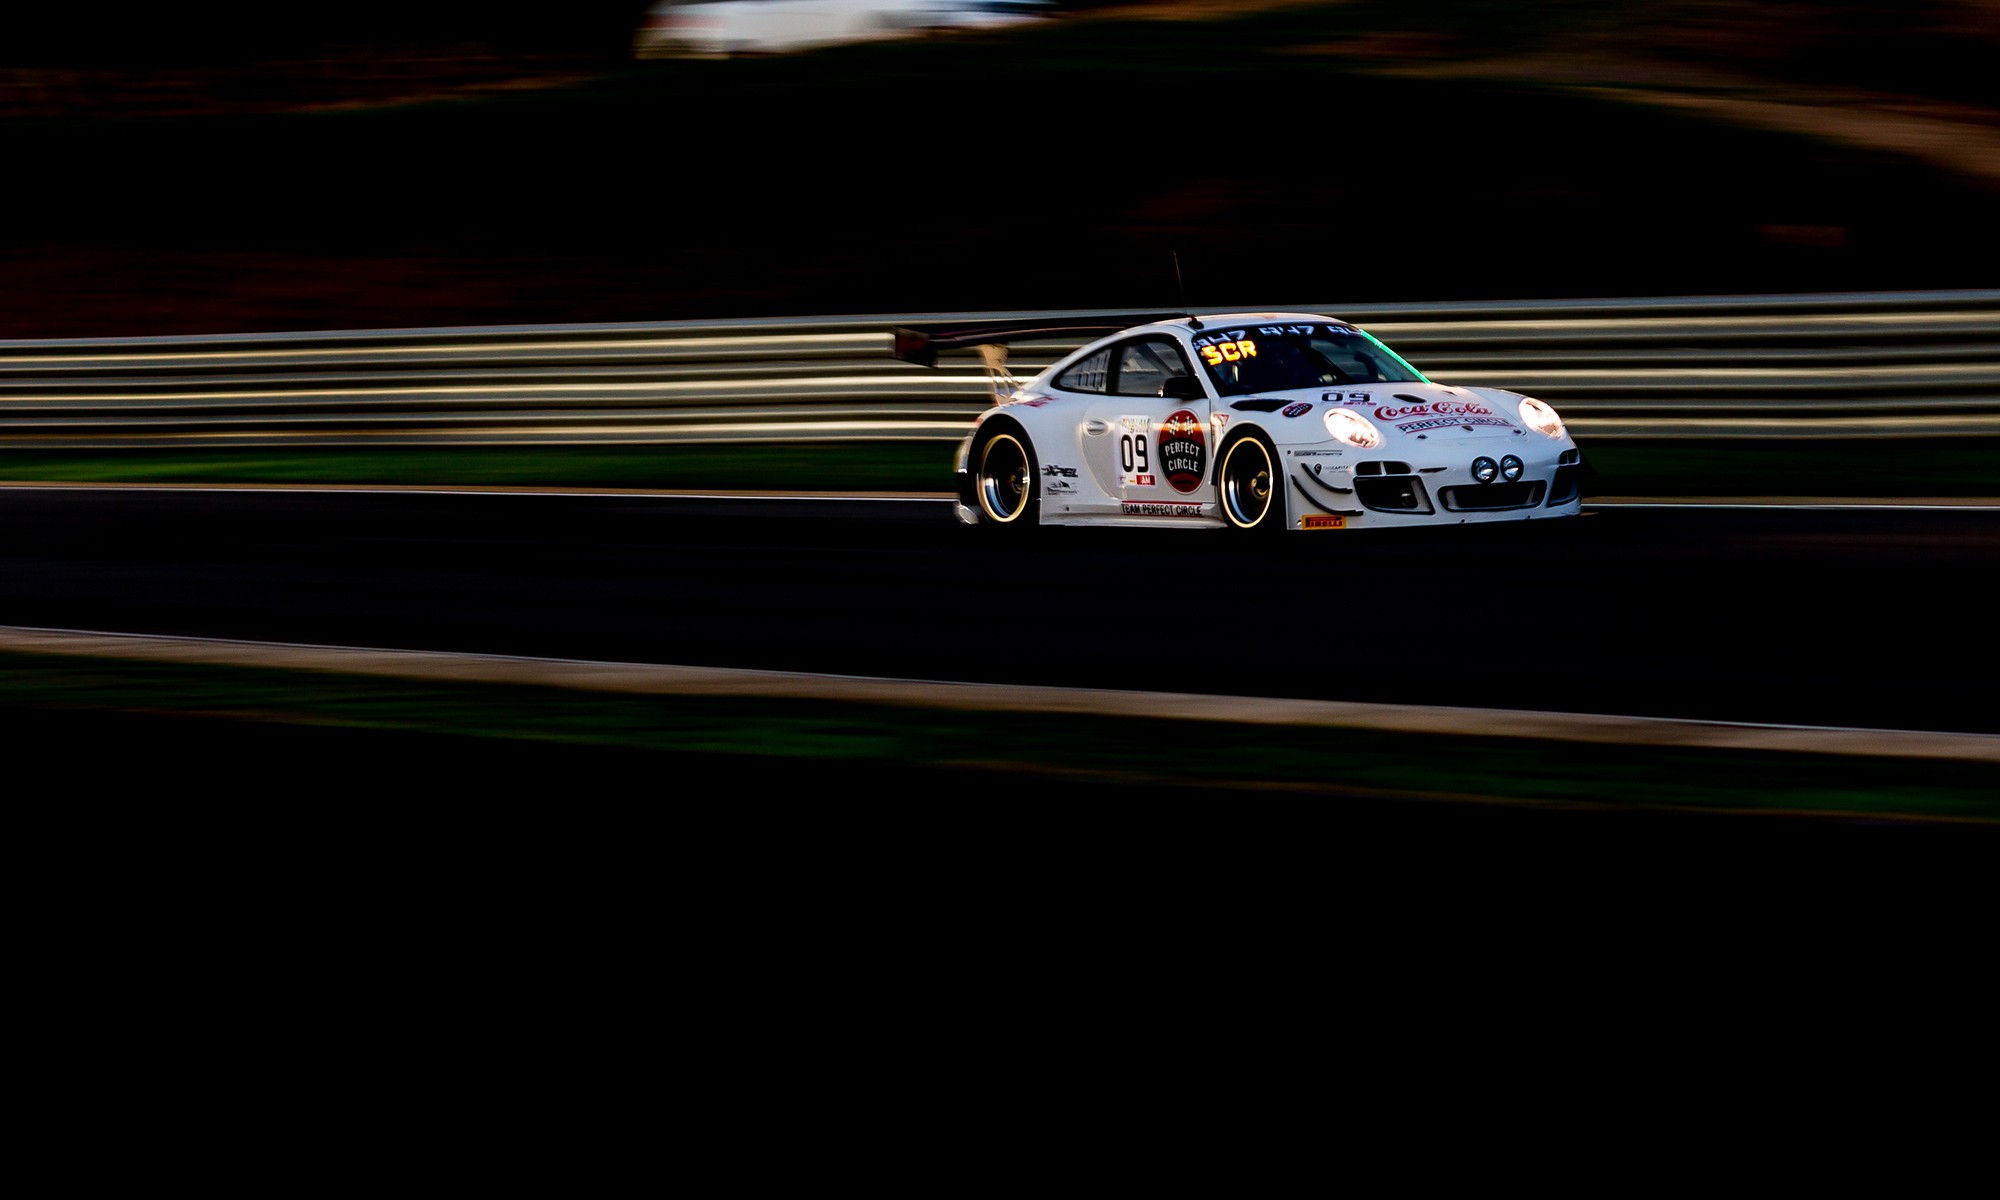 Team Perfect Circle Porsche during night practice (Image David Marchio)